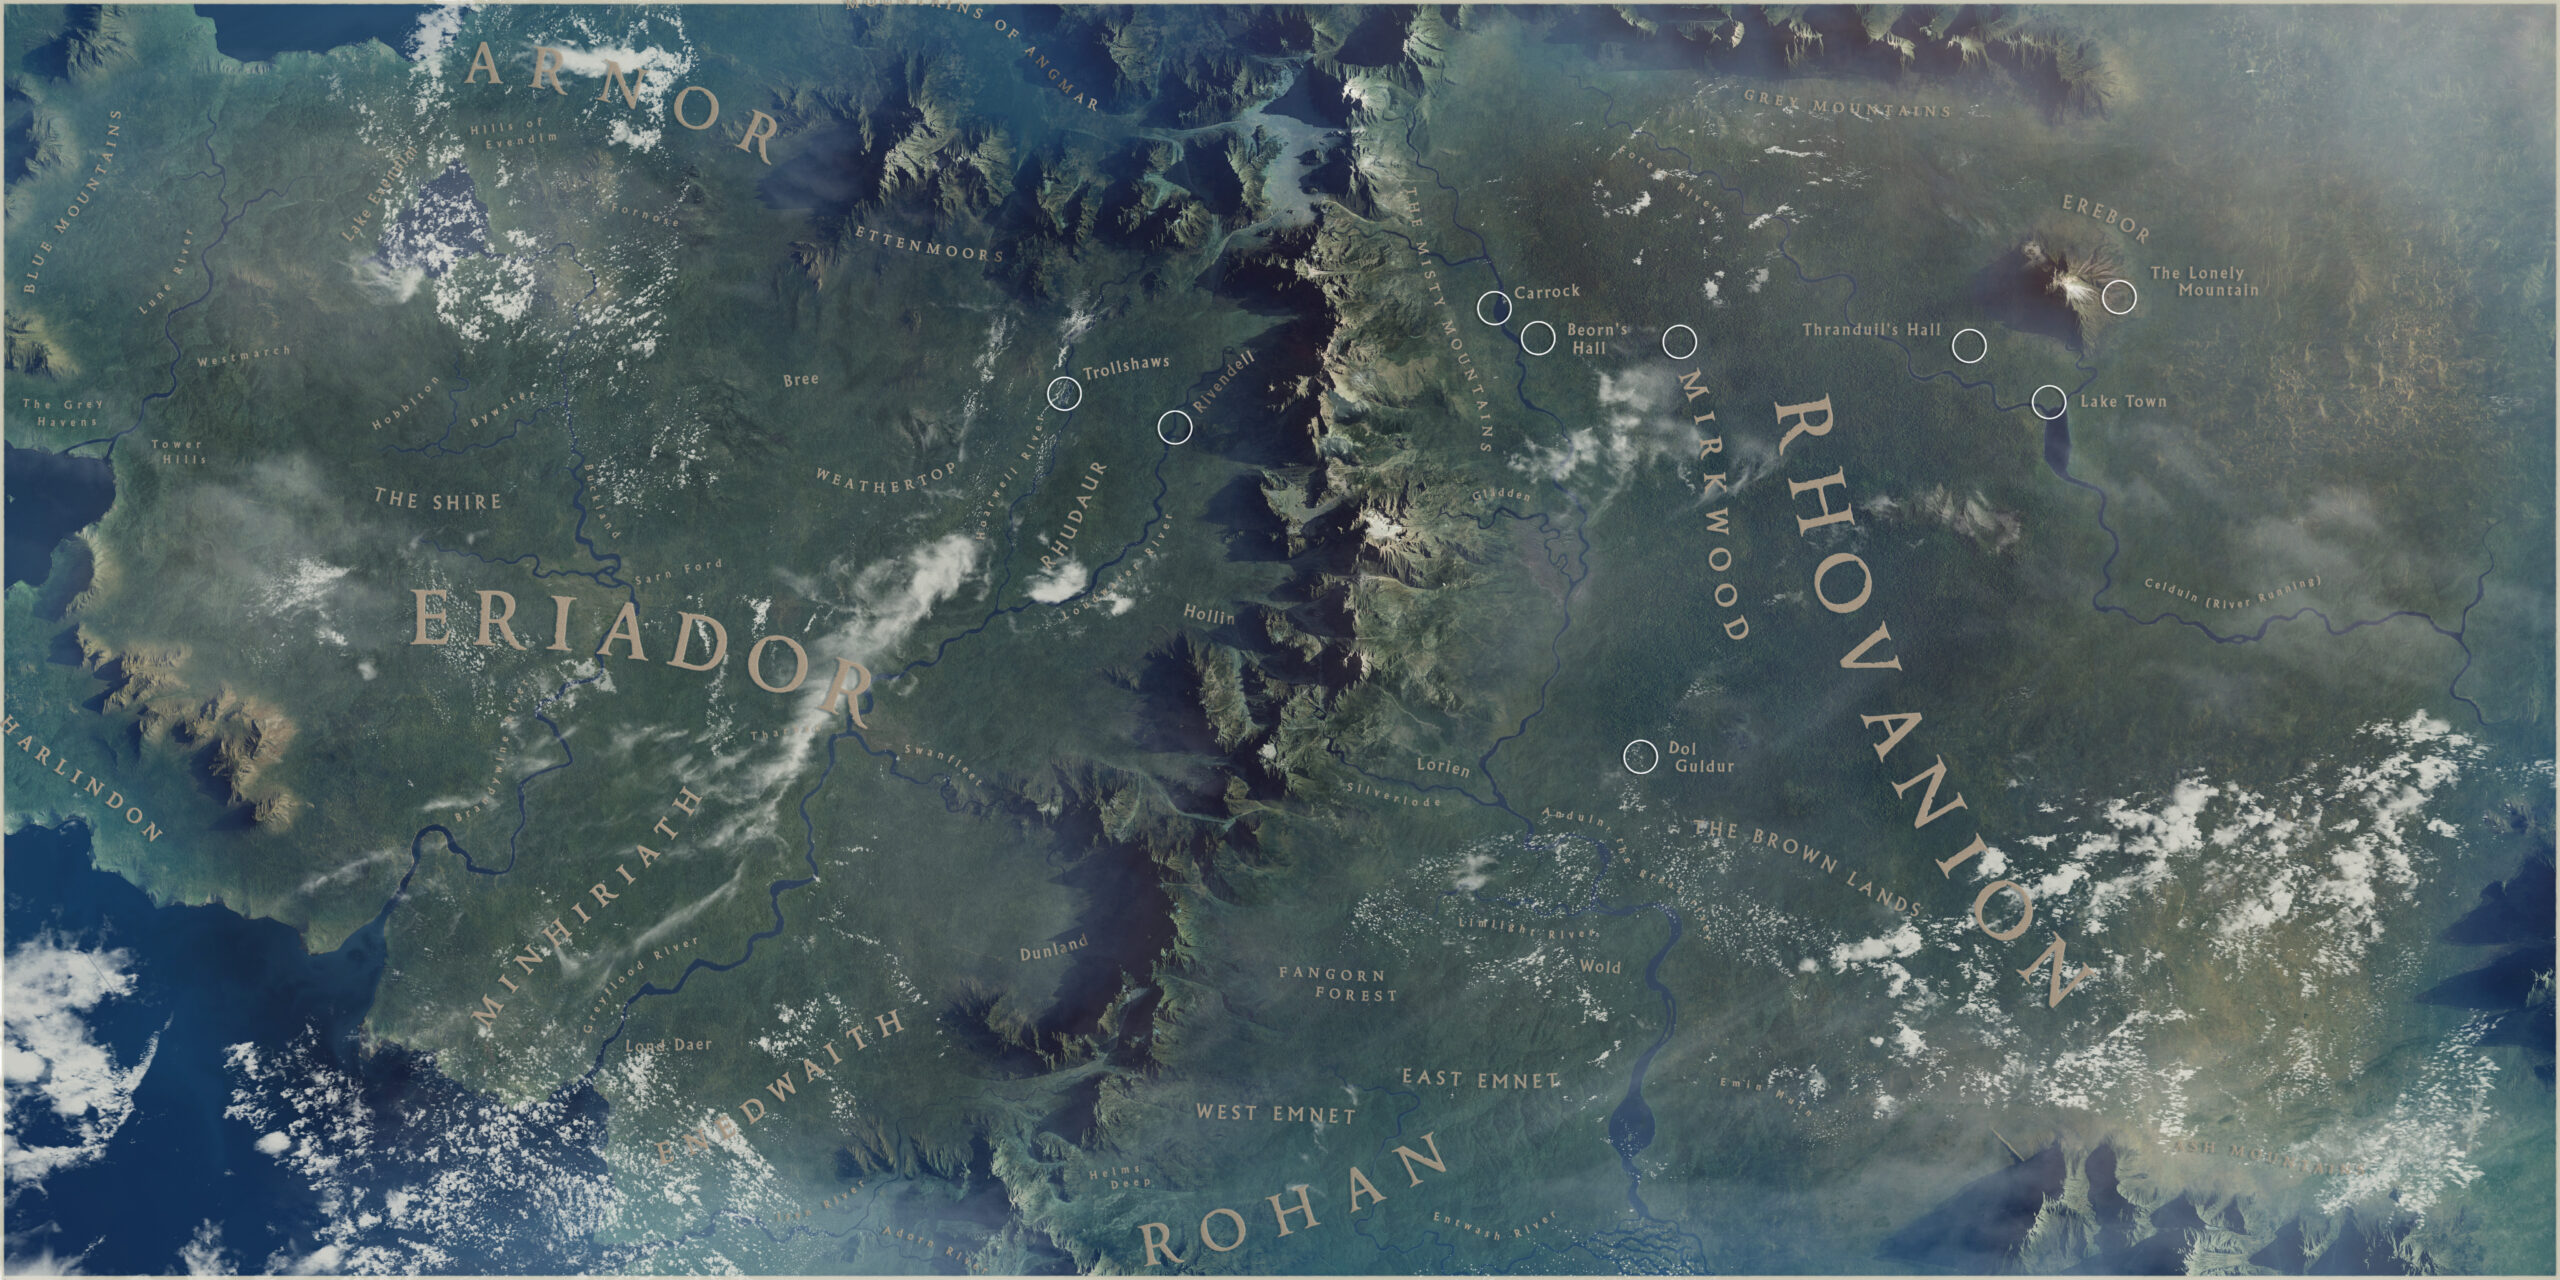 Hobbit-map-texture-clouds-names_corr